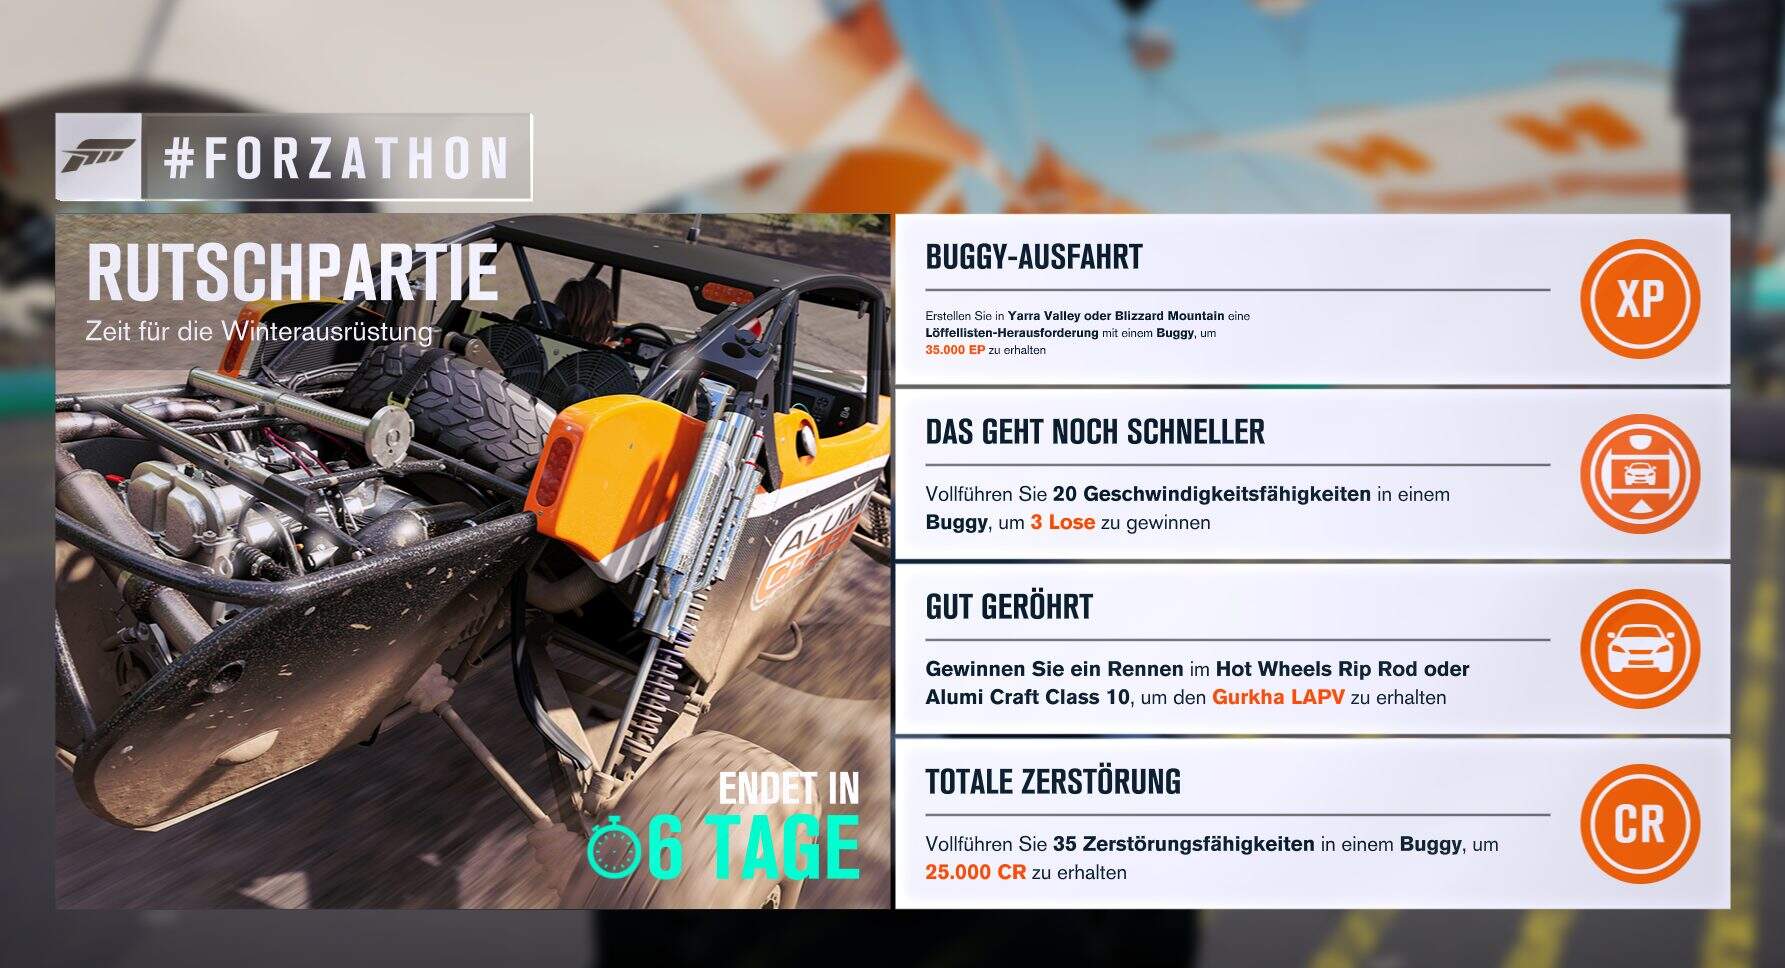 Forza Horizon 3 #Forzathon Guide KW 50 – Rutschpartie